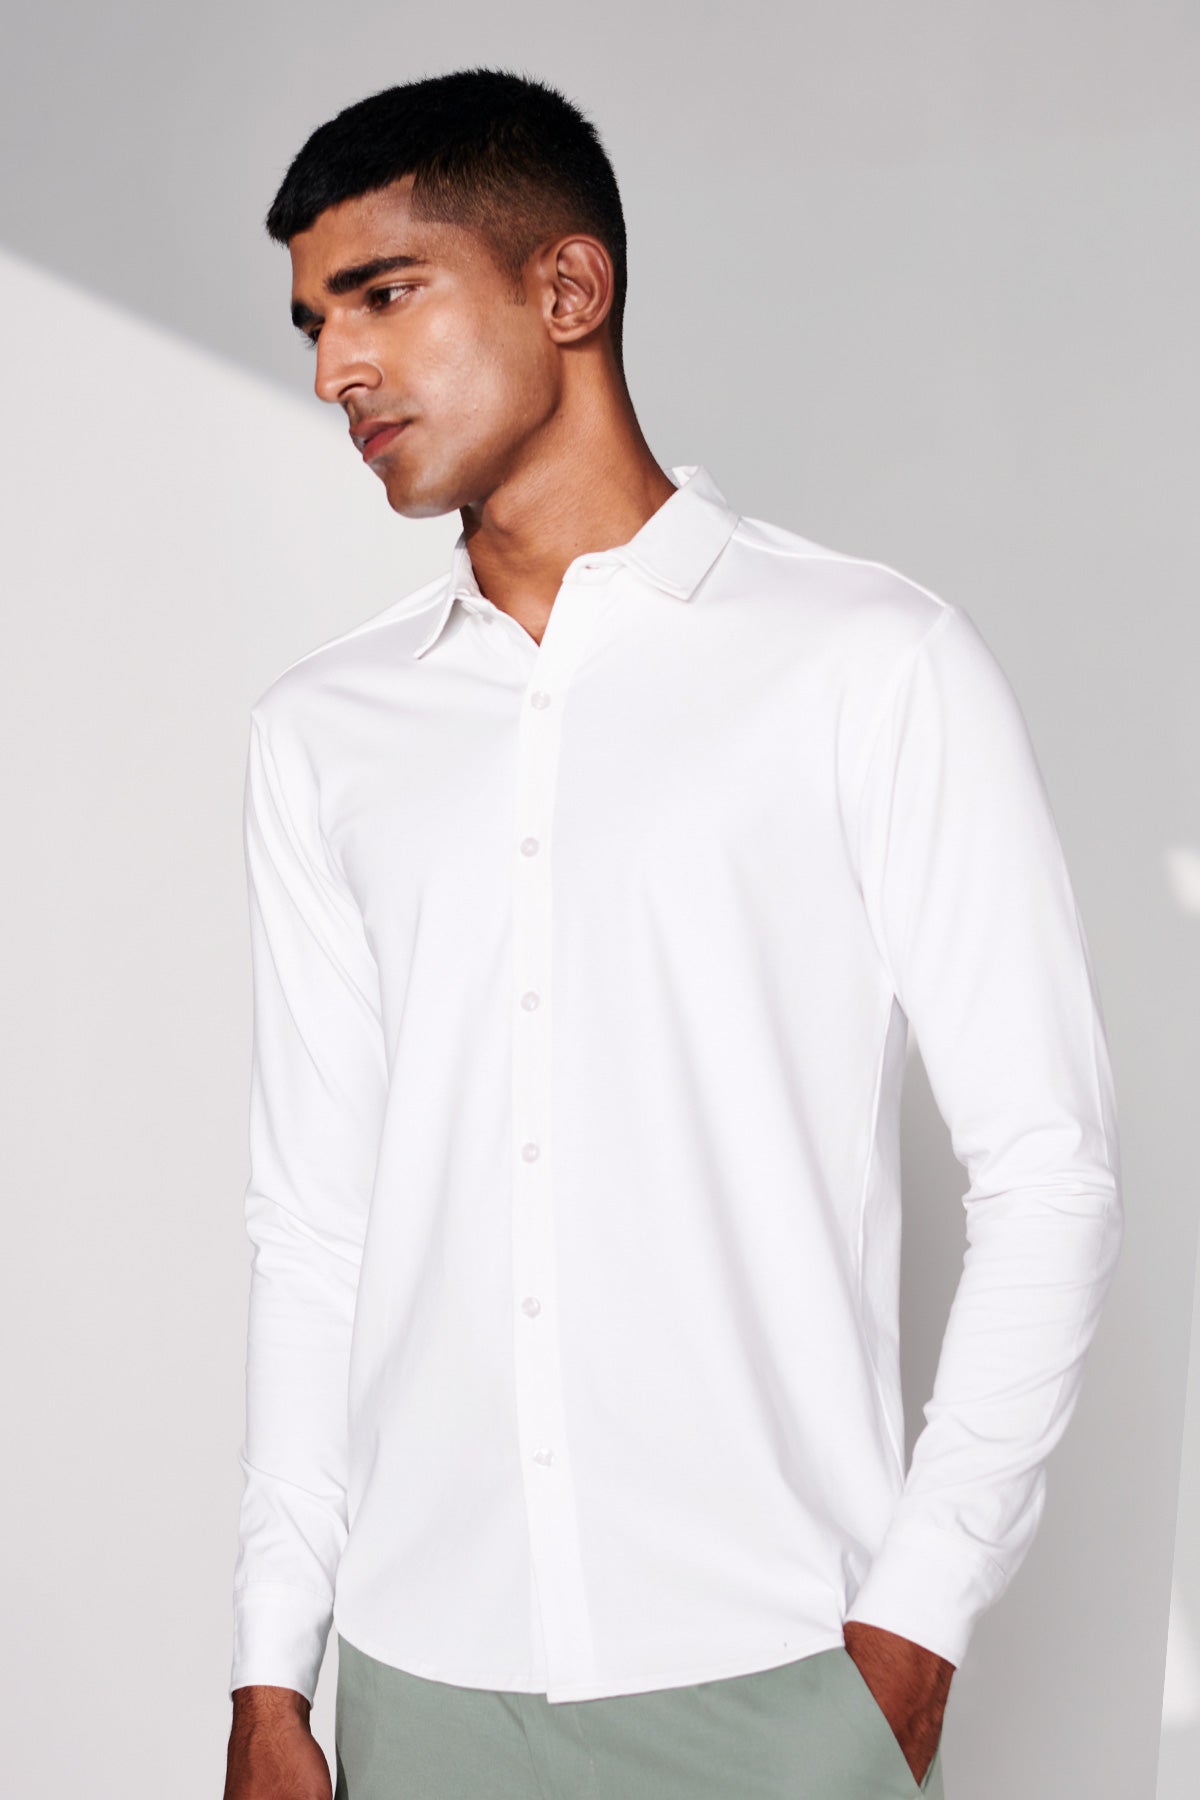 Buy Full Sleeve Pure White Knit Shirt